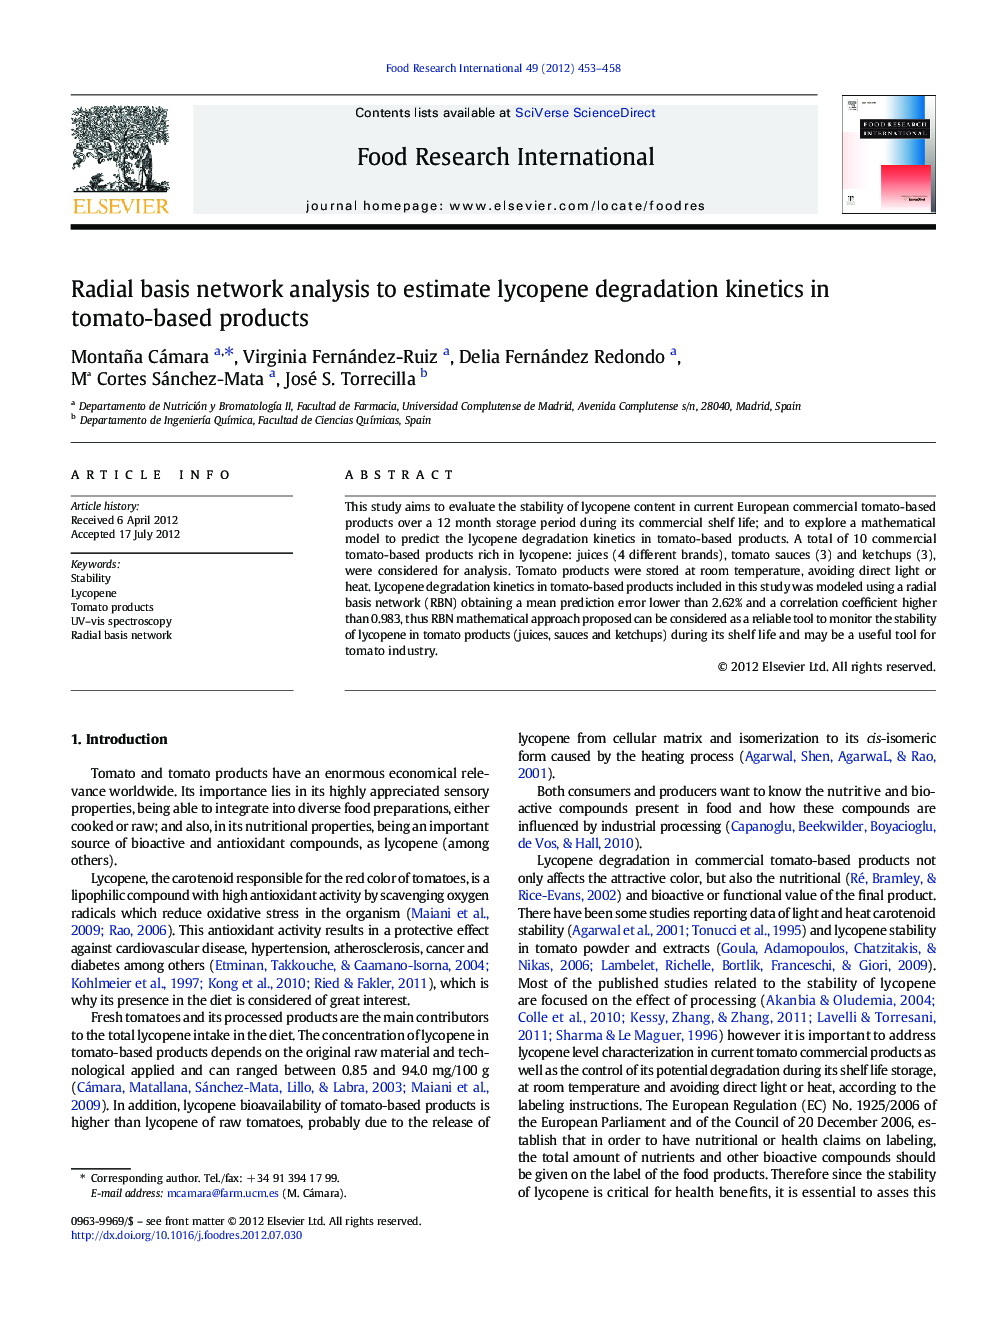 Radial basis network analysis to estimate lycopene degradation kinetics in tomato-based products